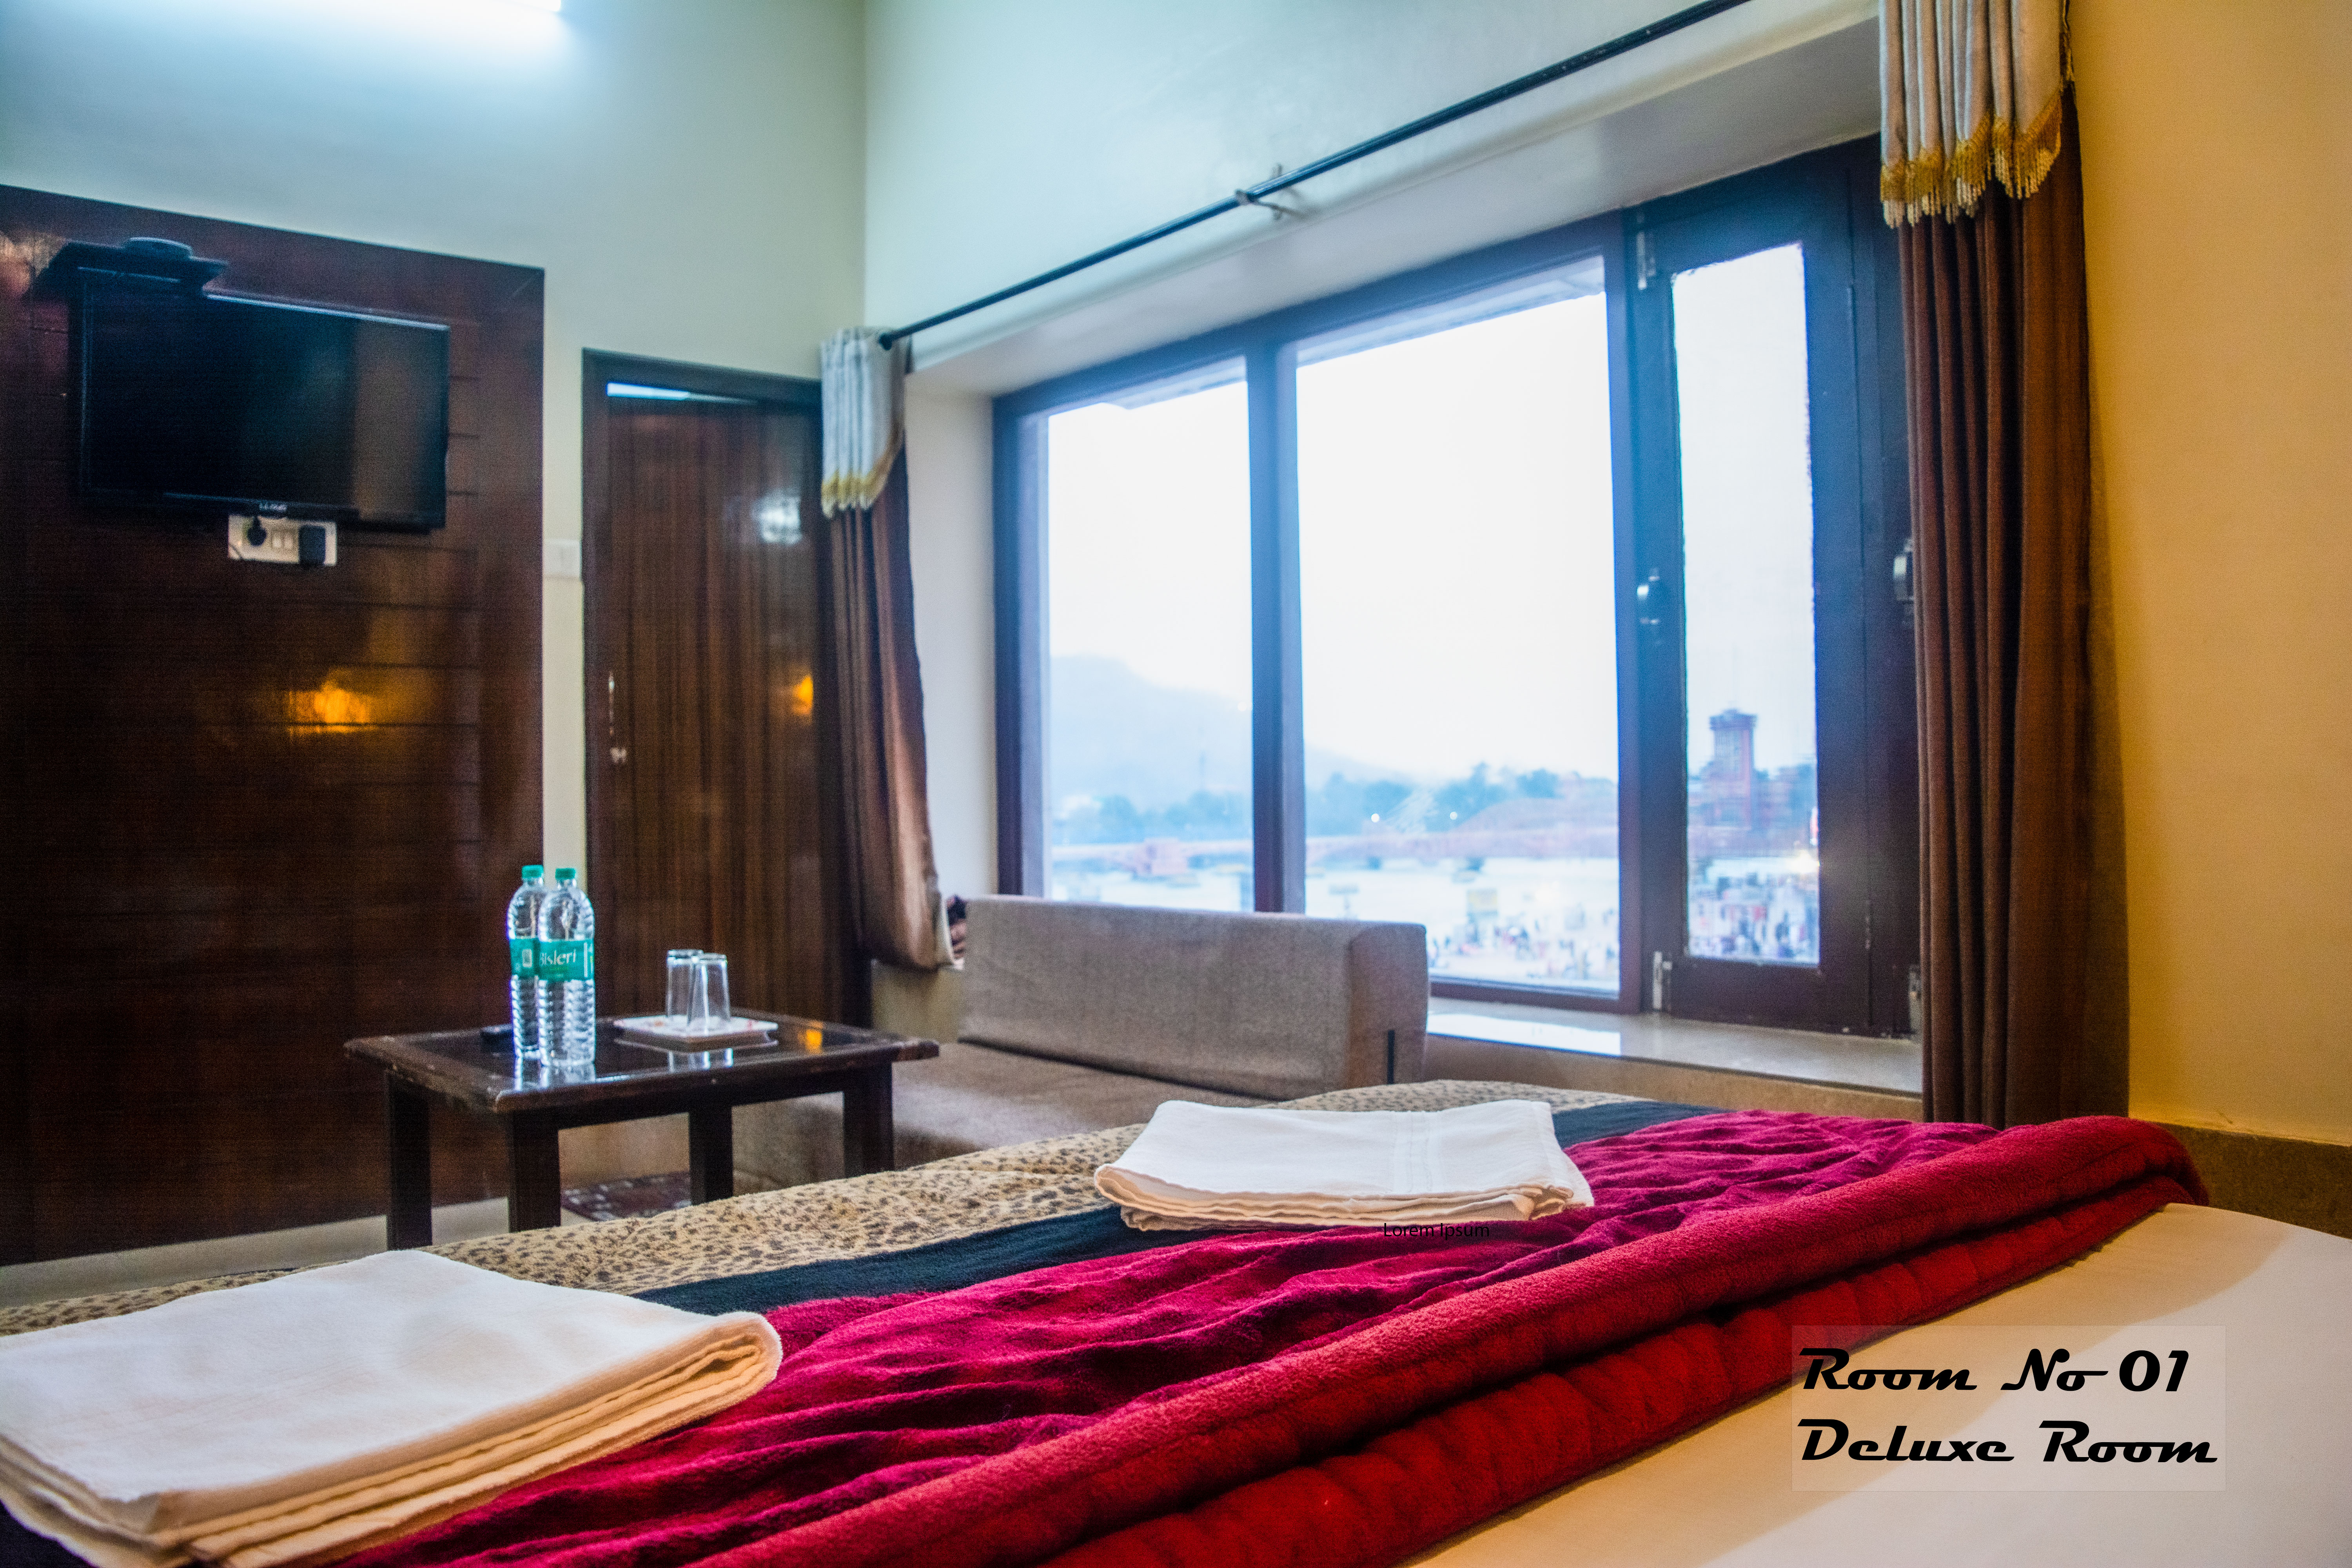 deluxe room 01 near to ganga ghat 